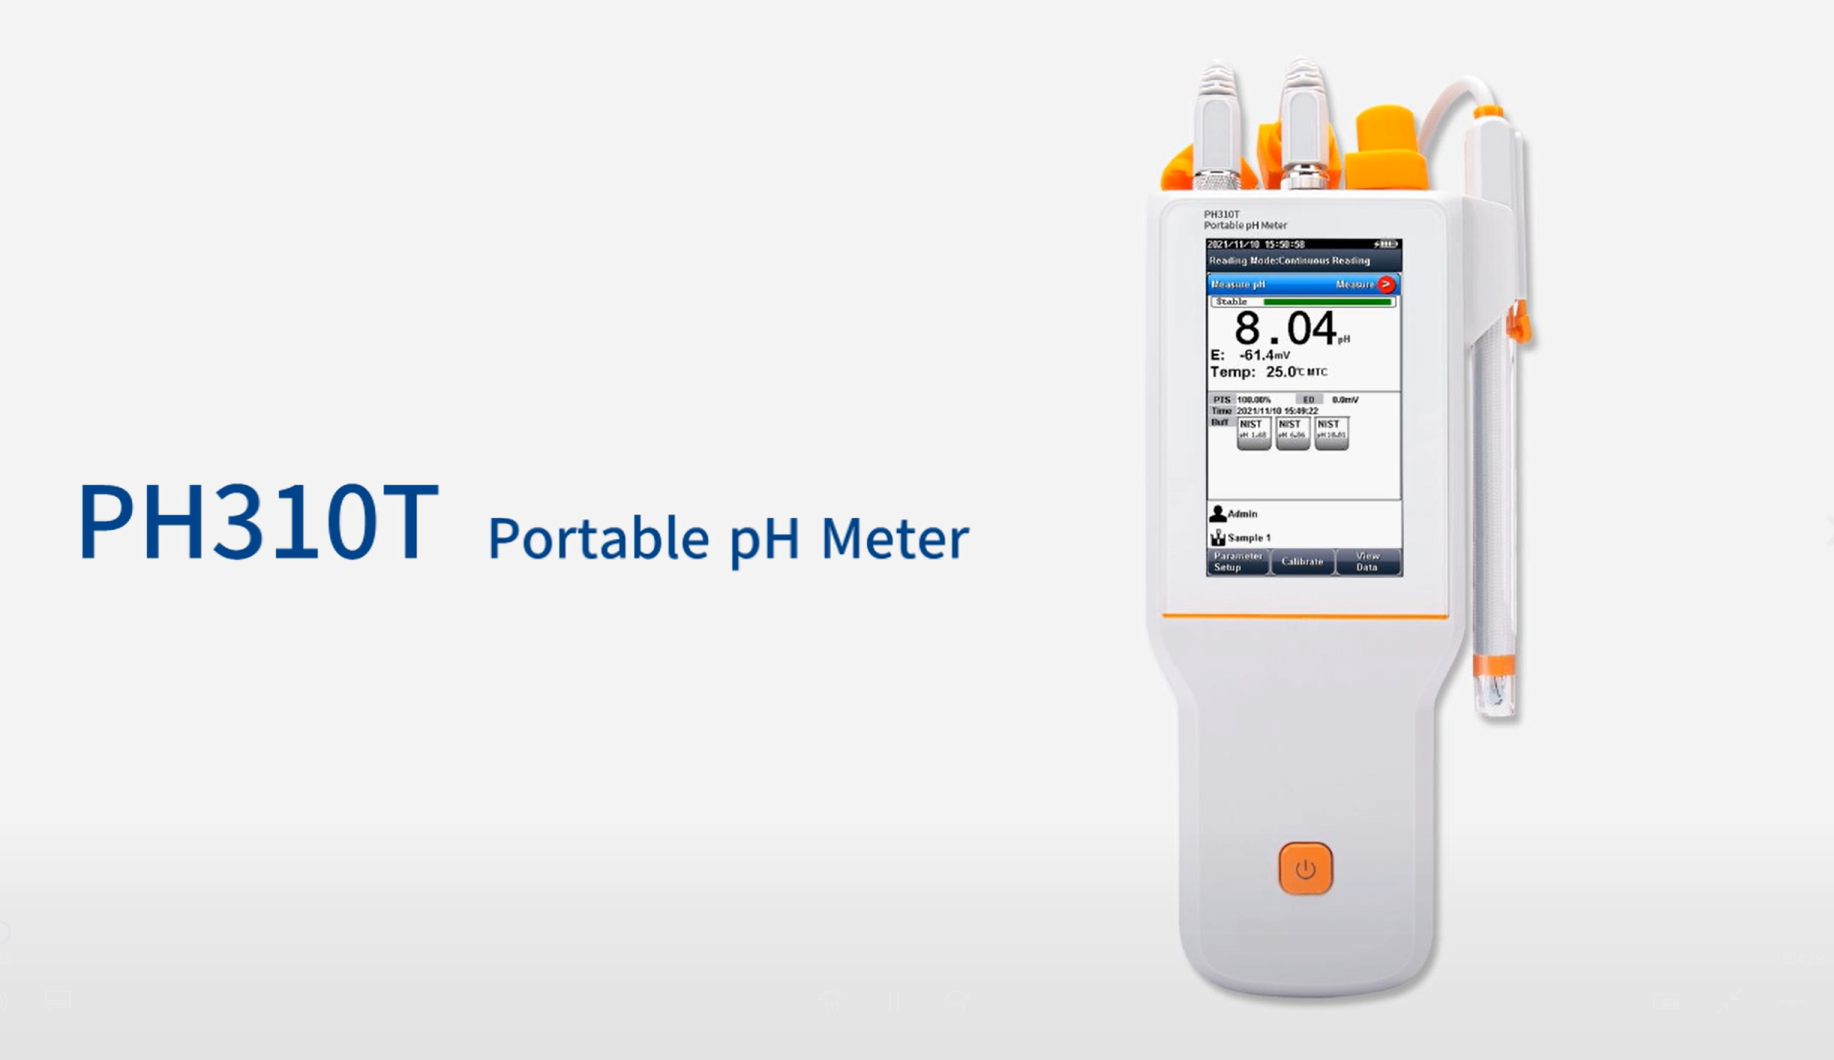 PH310T PH Meter operation, measurement, calibration and maintenance